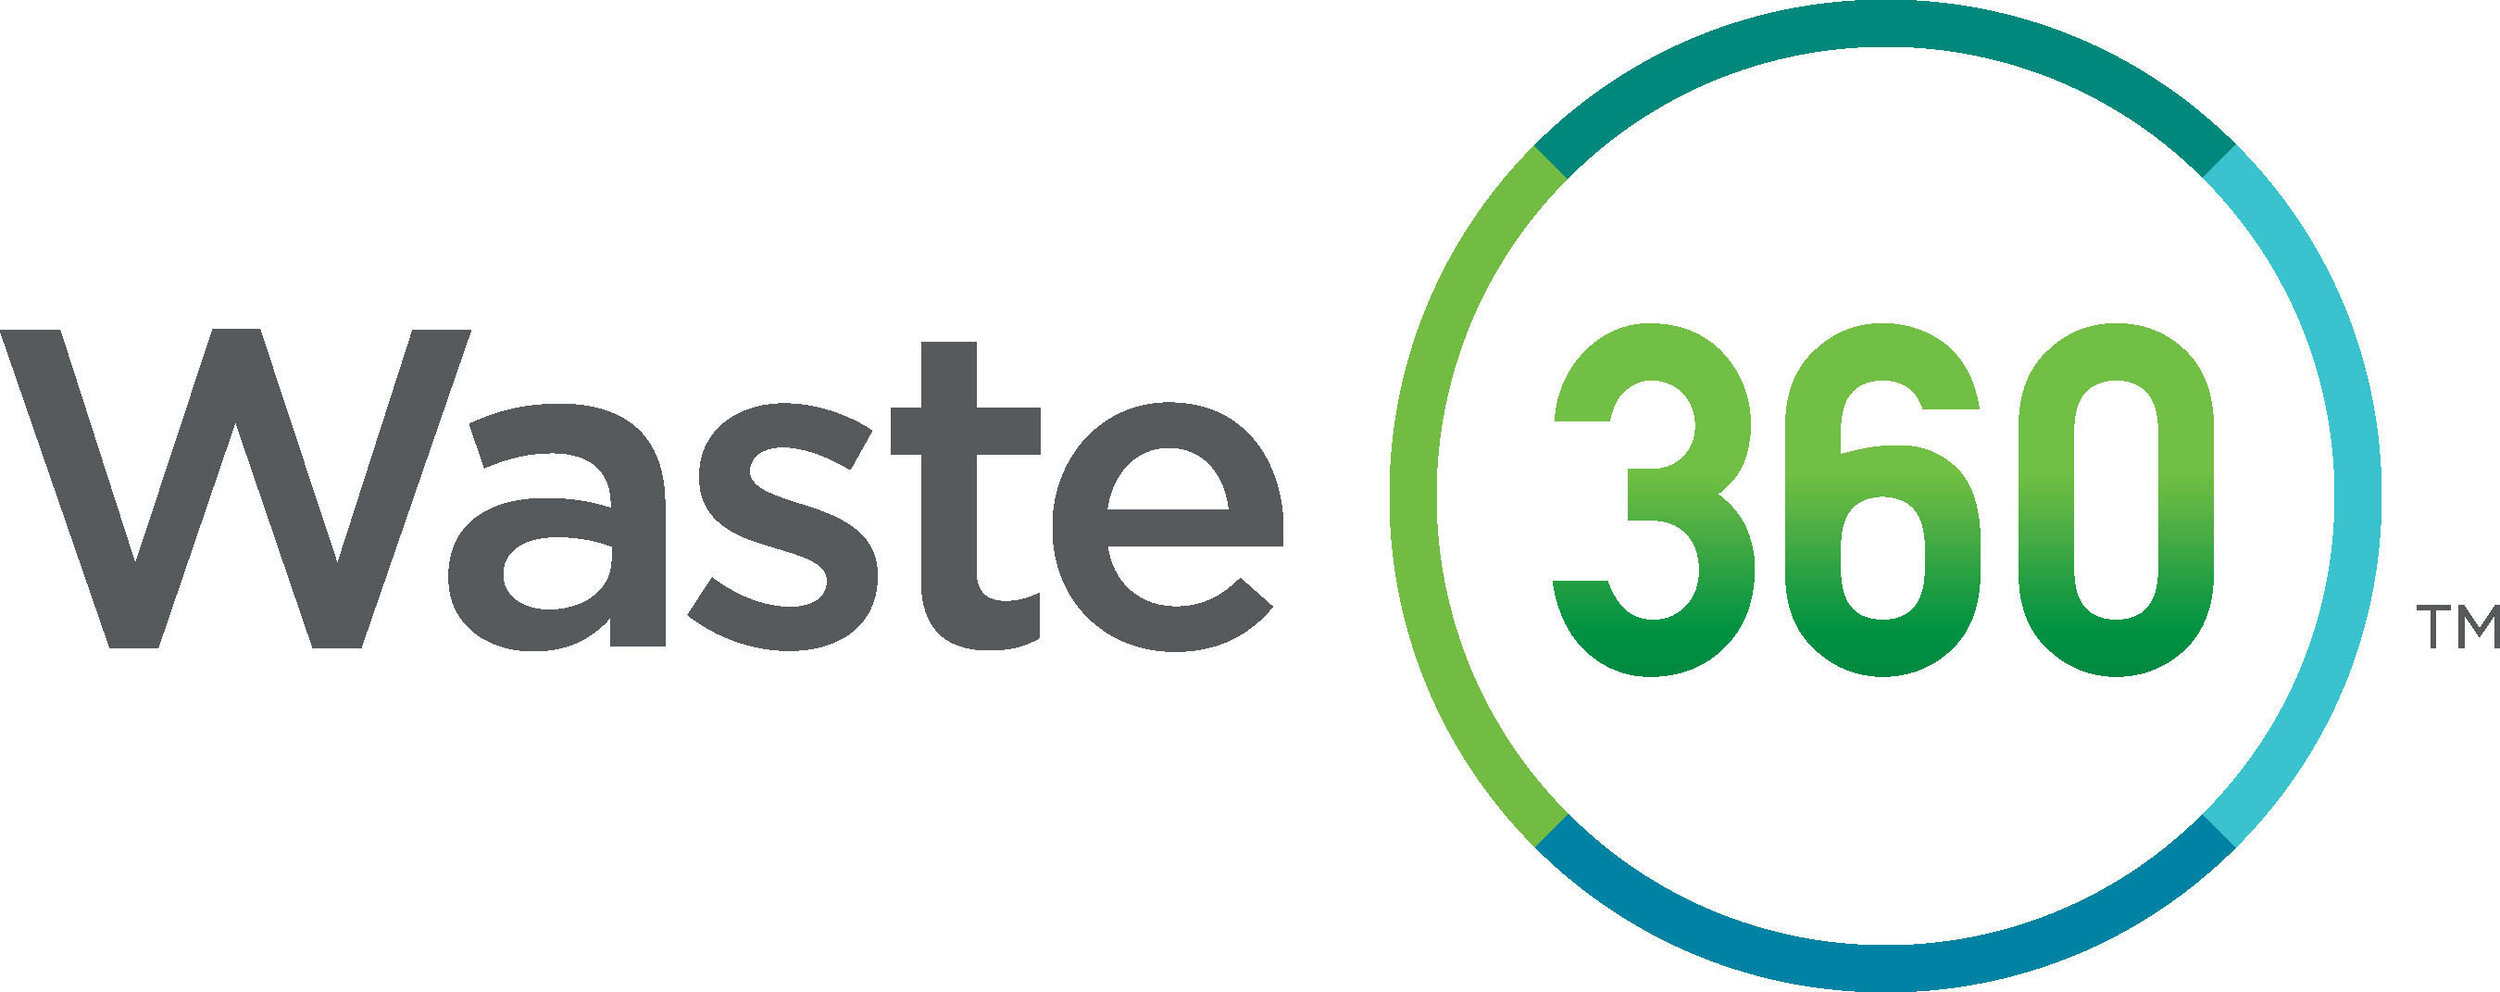 Waste360-logo.jpg